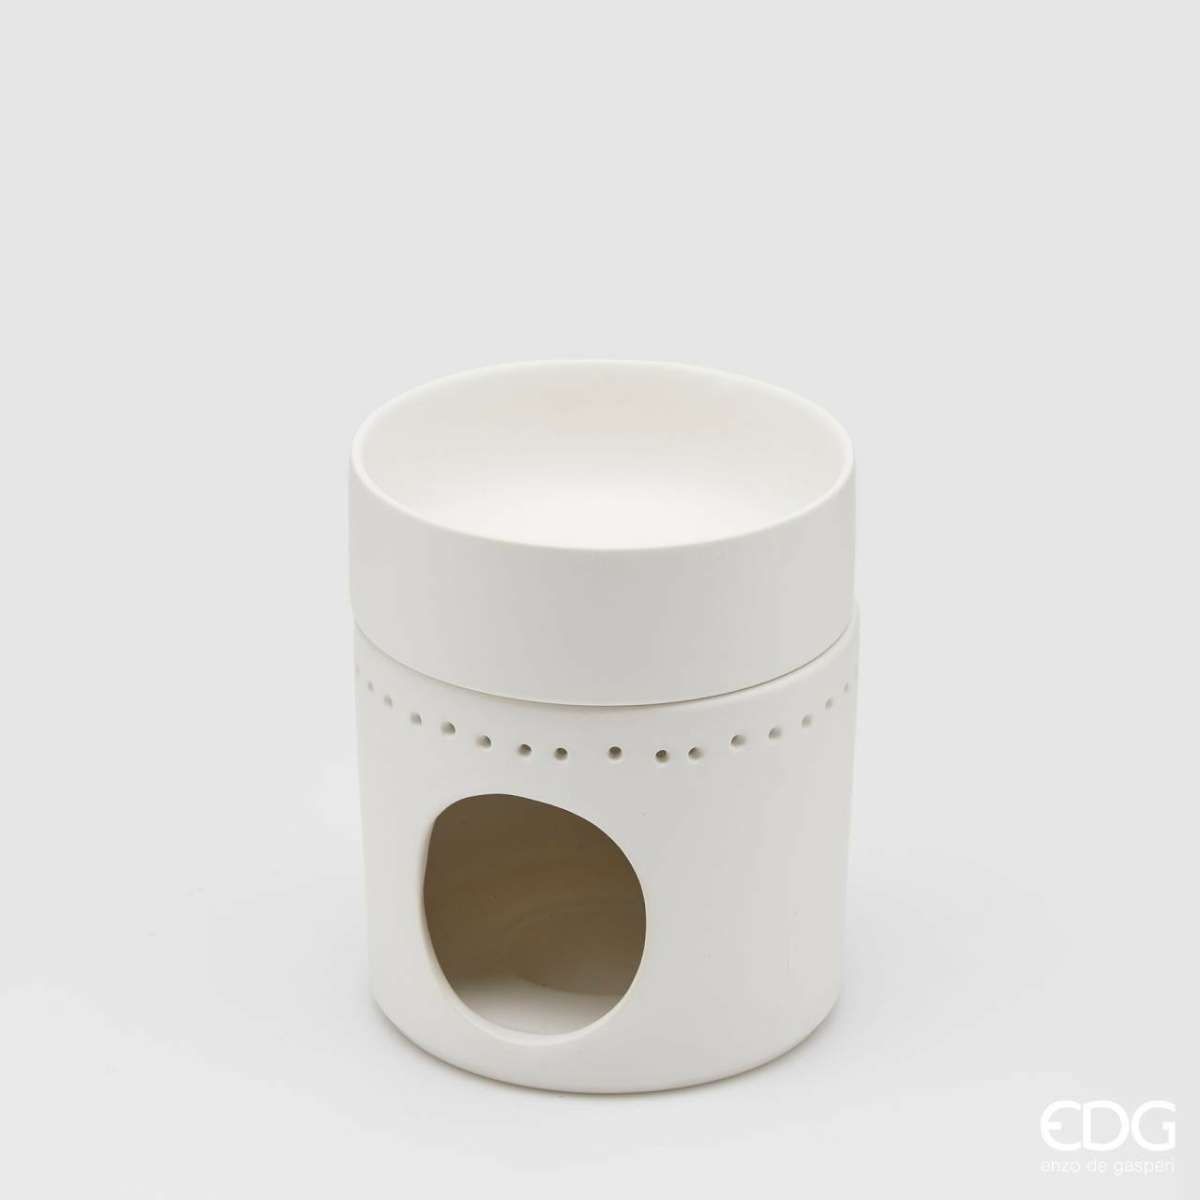 Diffusore Oli essenziali Design in ceramica Bianca, EDG - Arredo